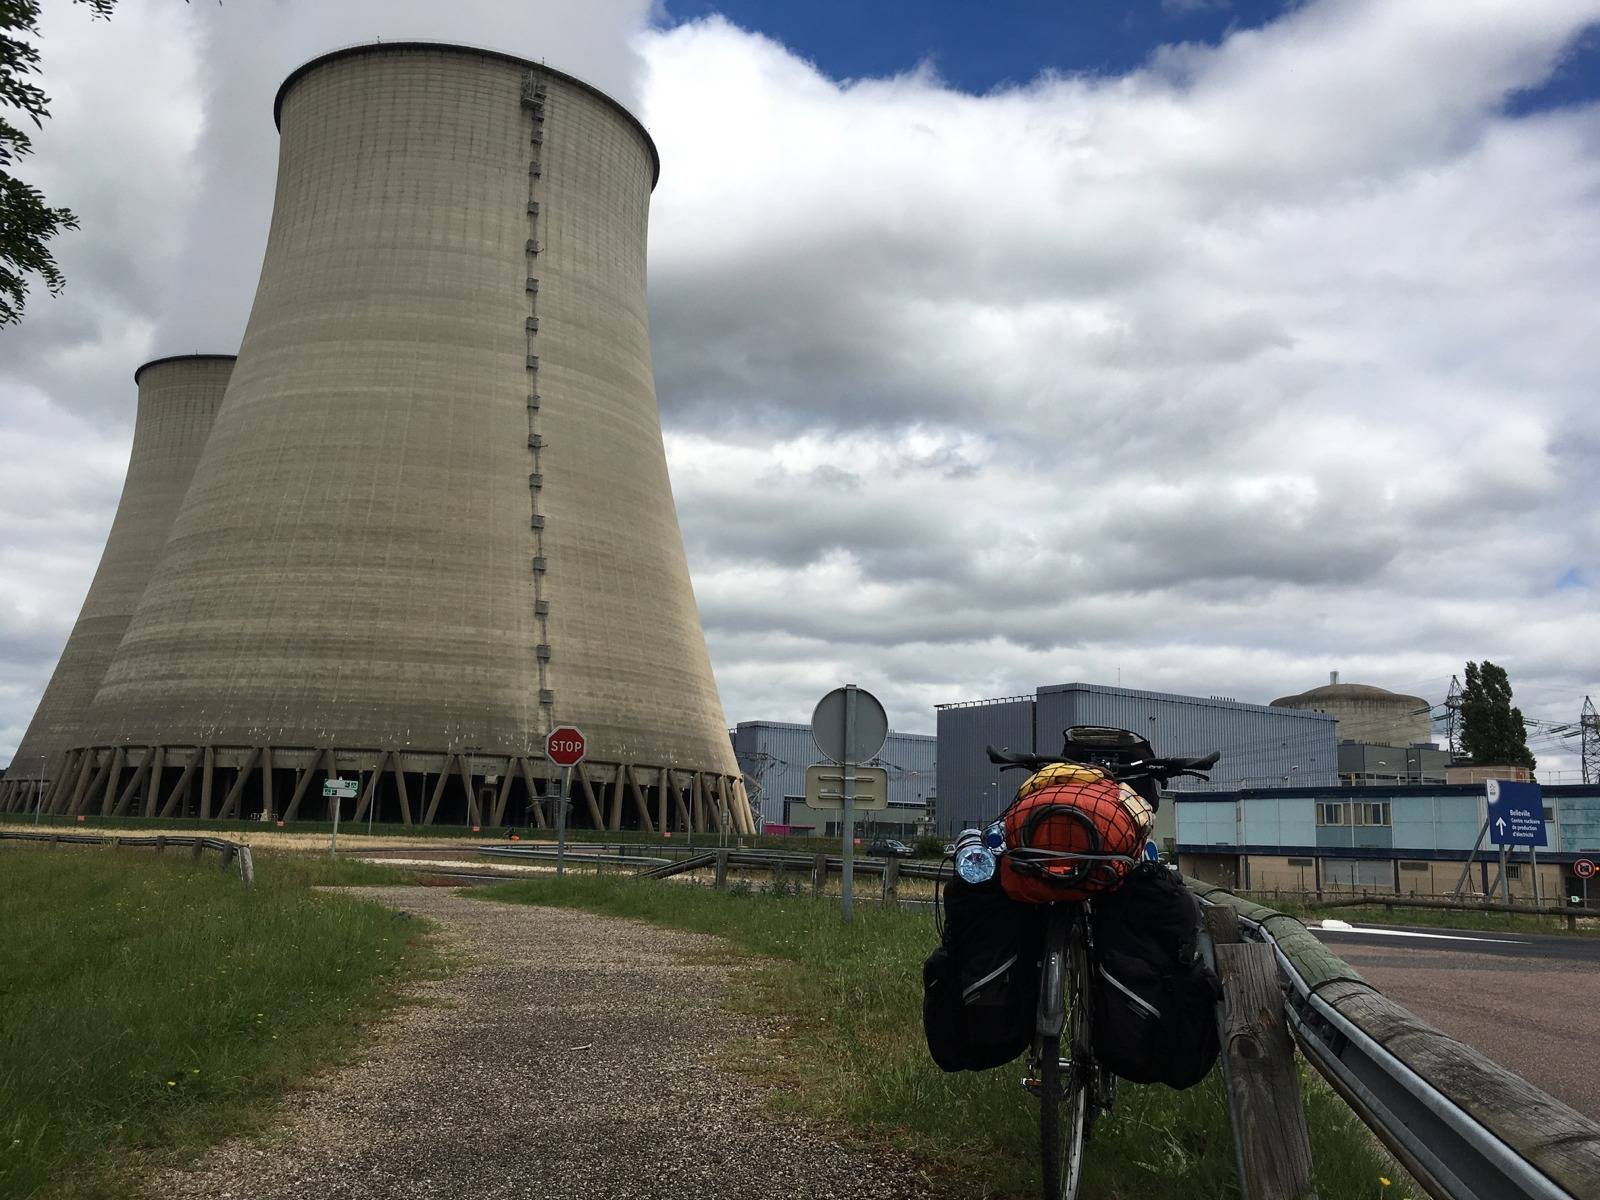 Belleville Nuclear Power Plant 2620 MW